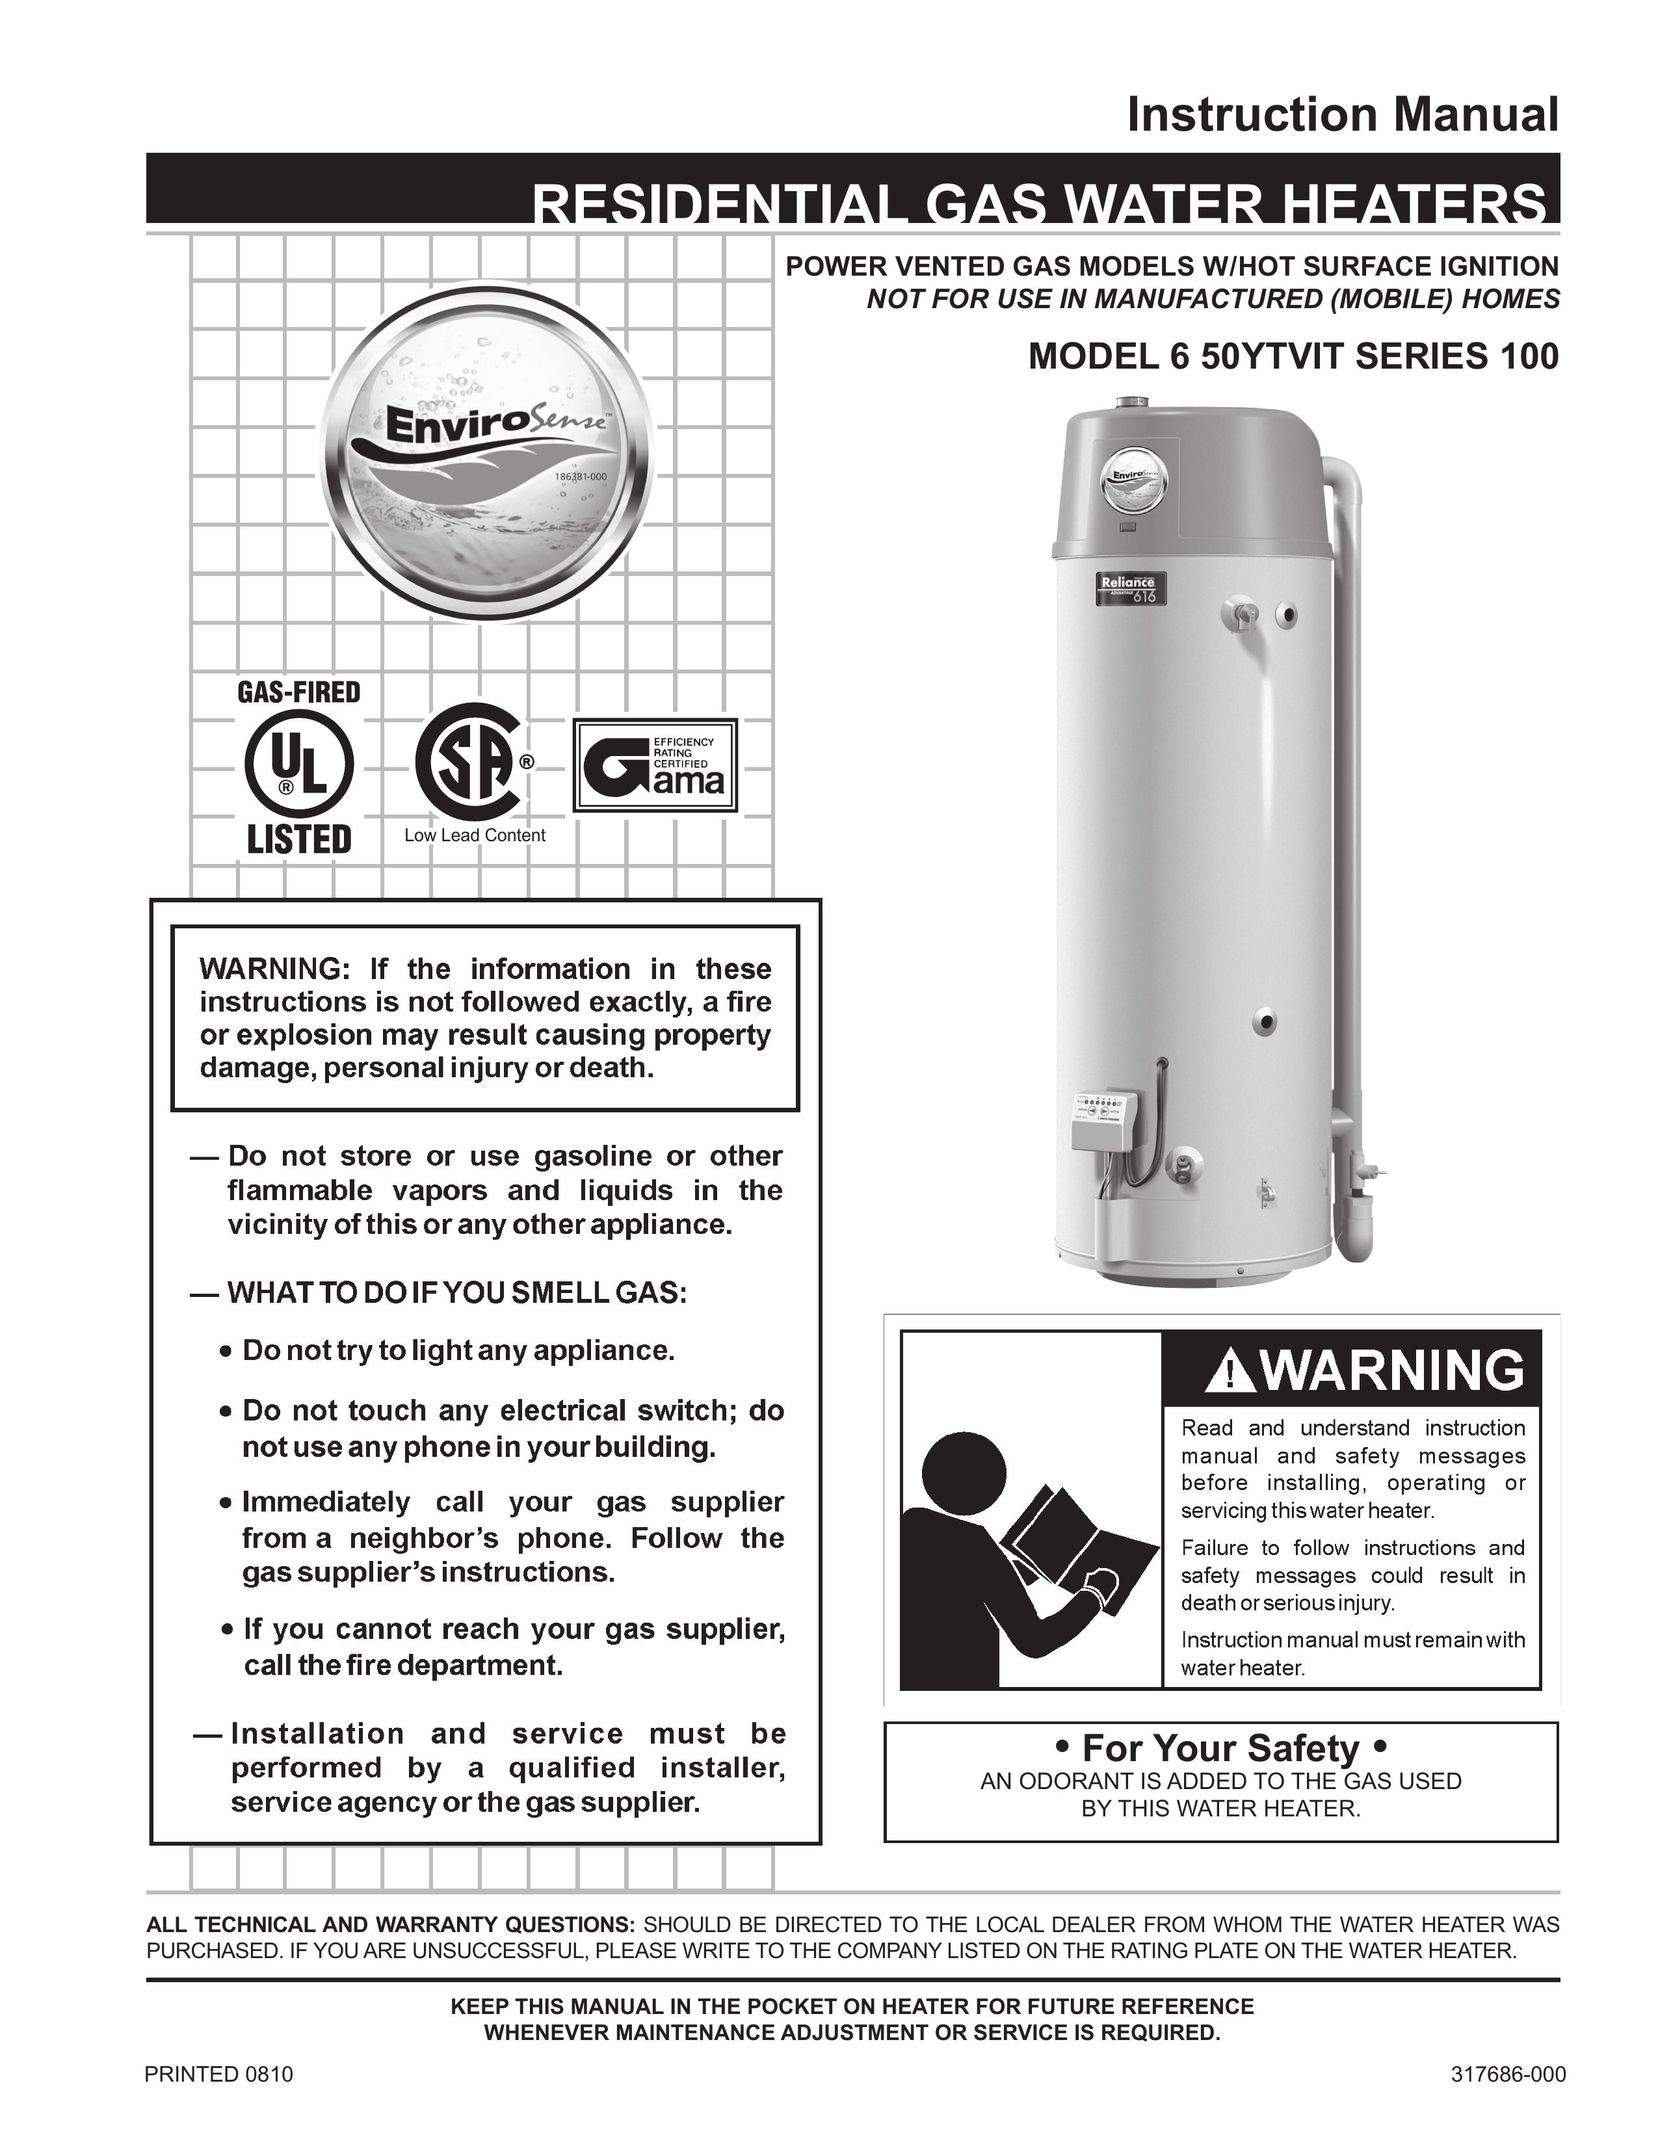 Reliance Water Heaters 317686-000 Water Heater User Manual